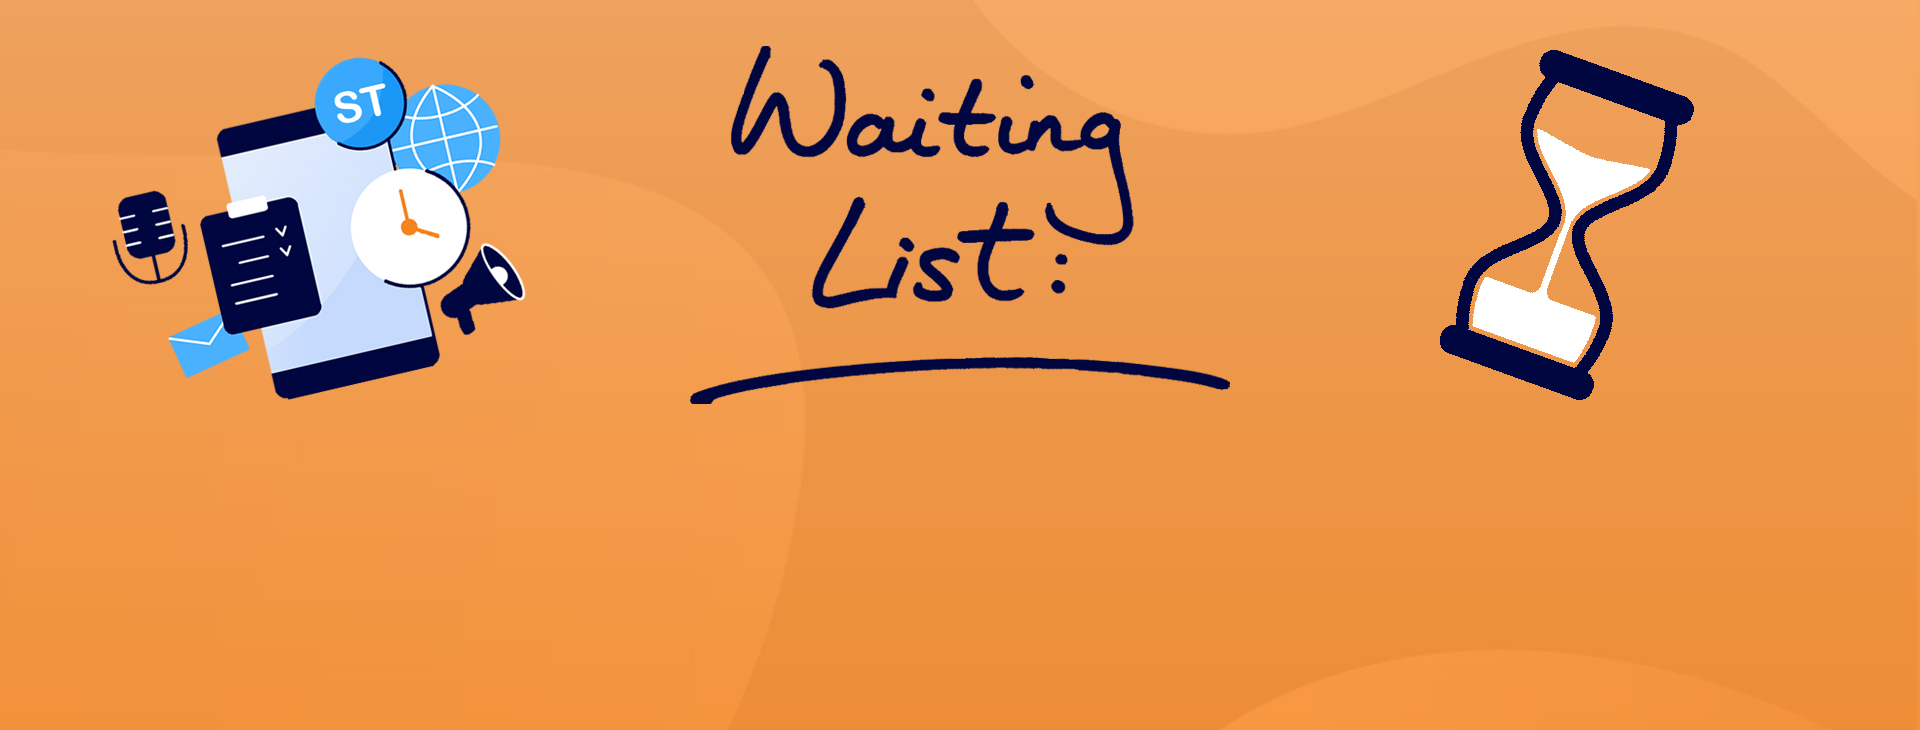 Image for ShowingTime Launches Waitlist Option